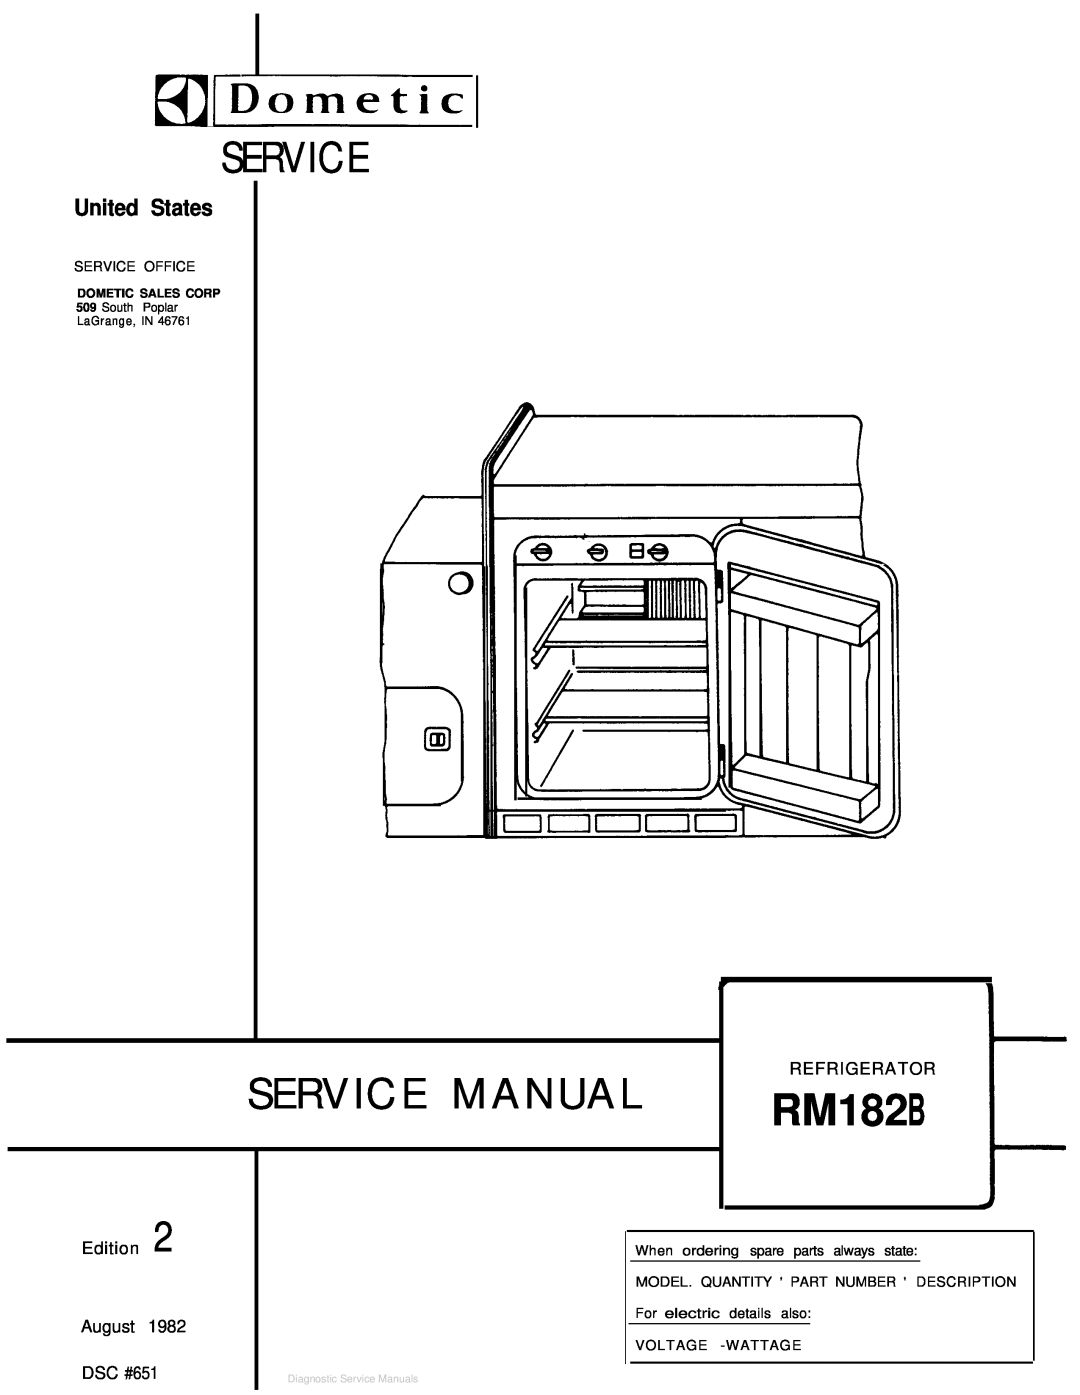 Dometic RM182B service manual BTDometic, United States, R E F R I G E R A T O R, DSC #651, Service Office 